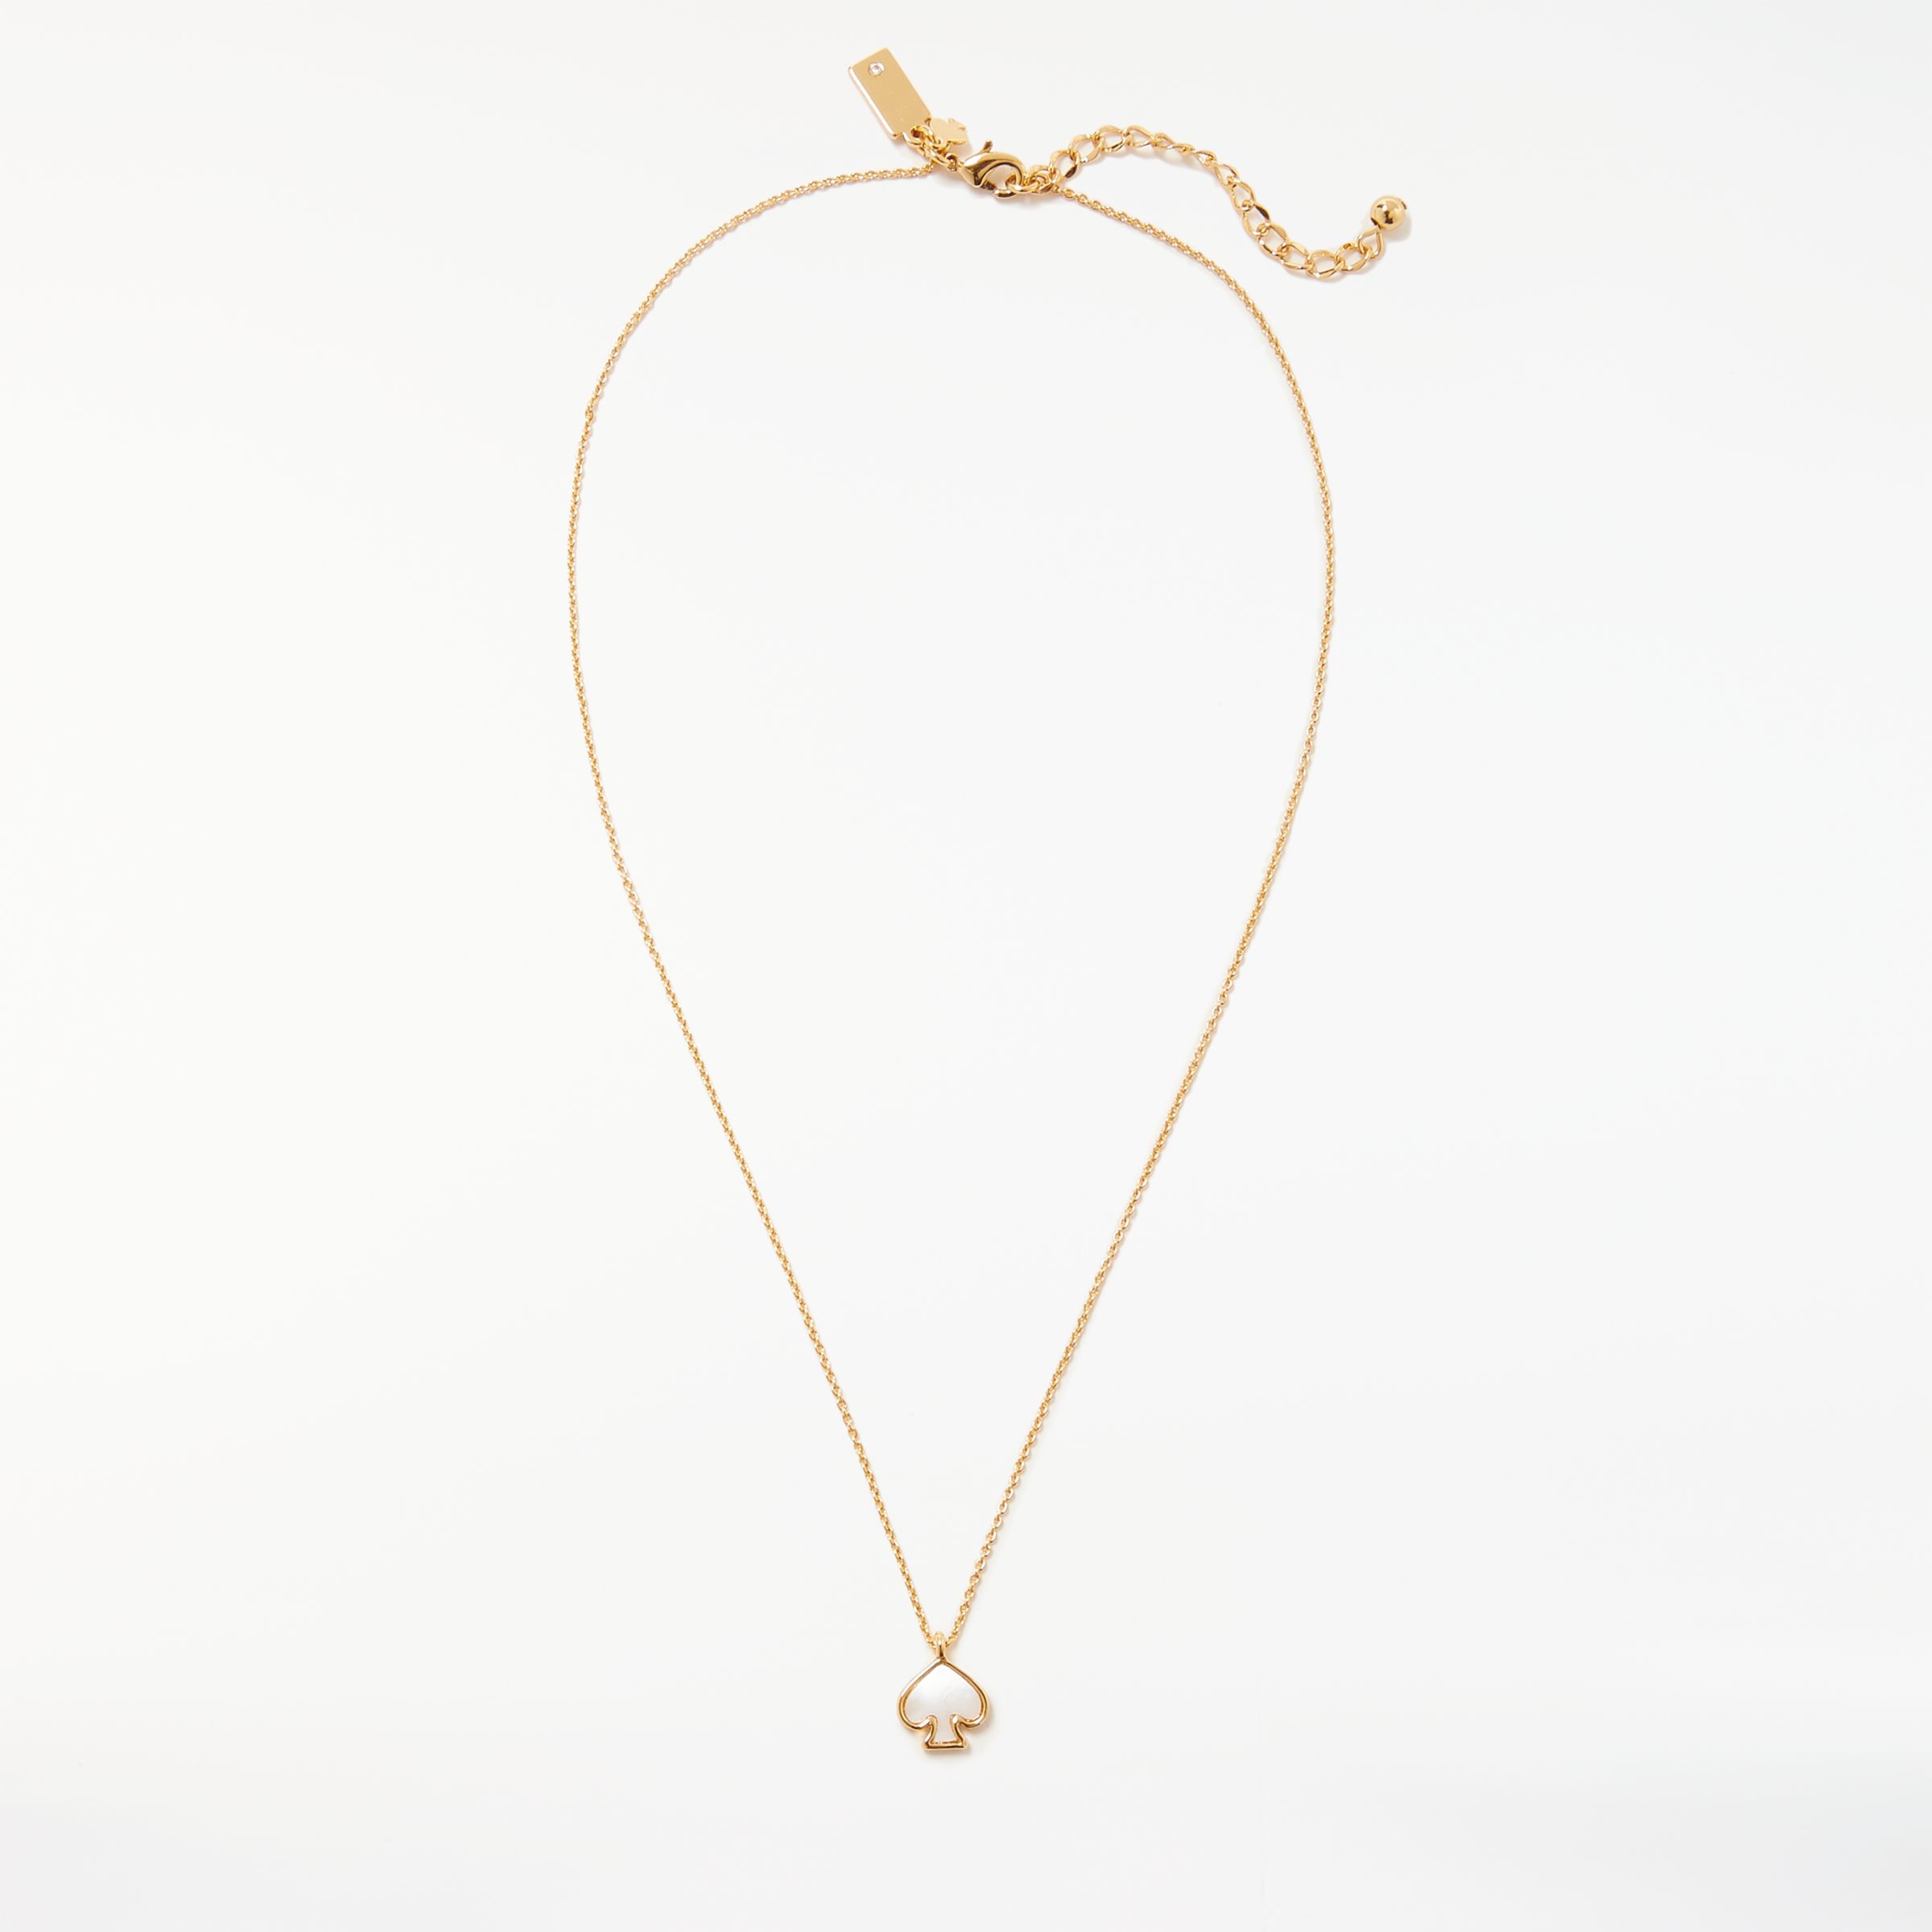 kate spade new york Mini Spade Pendant Necklace, Cream/Gold